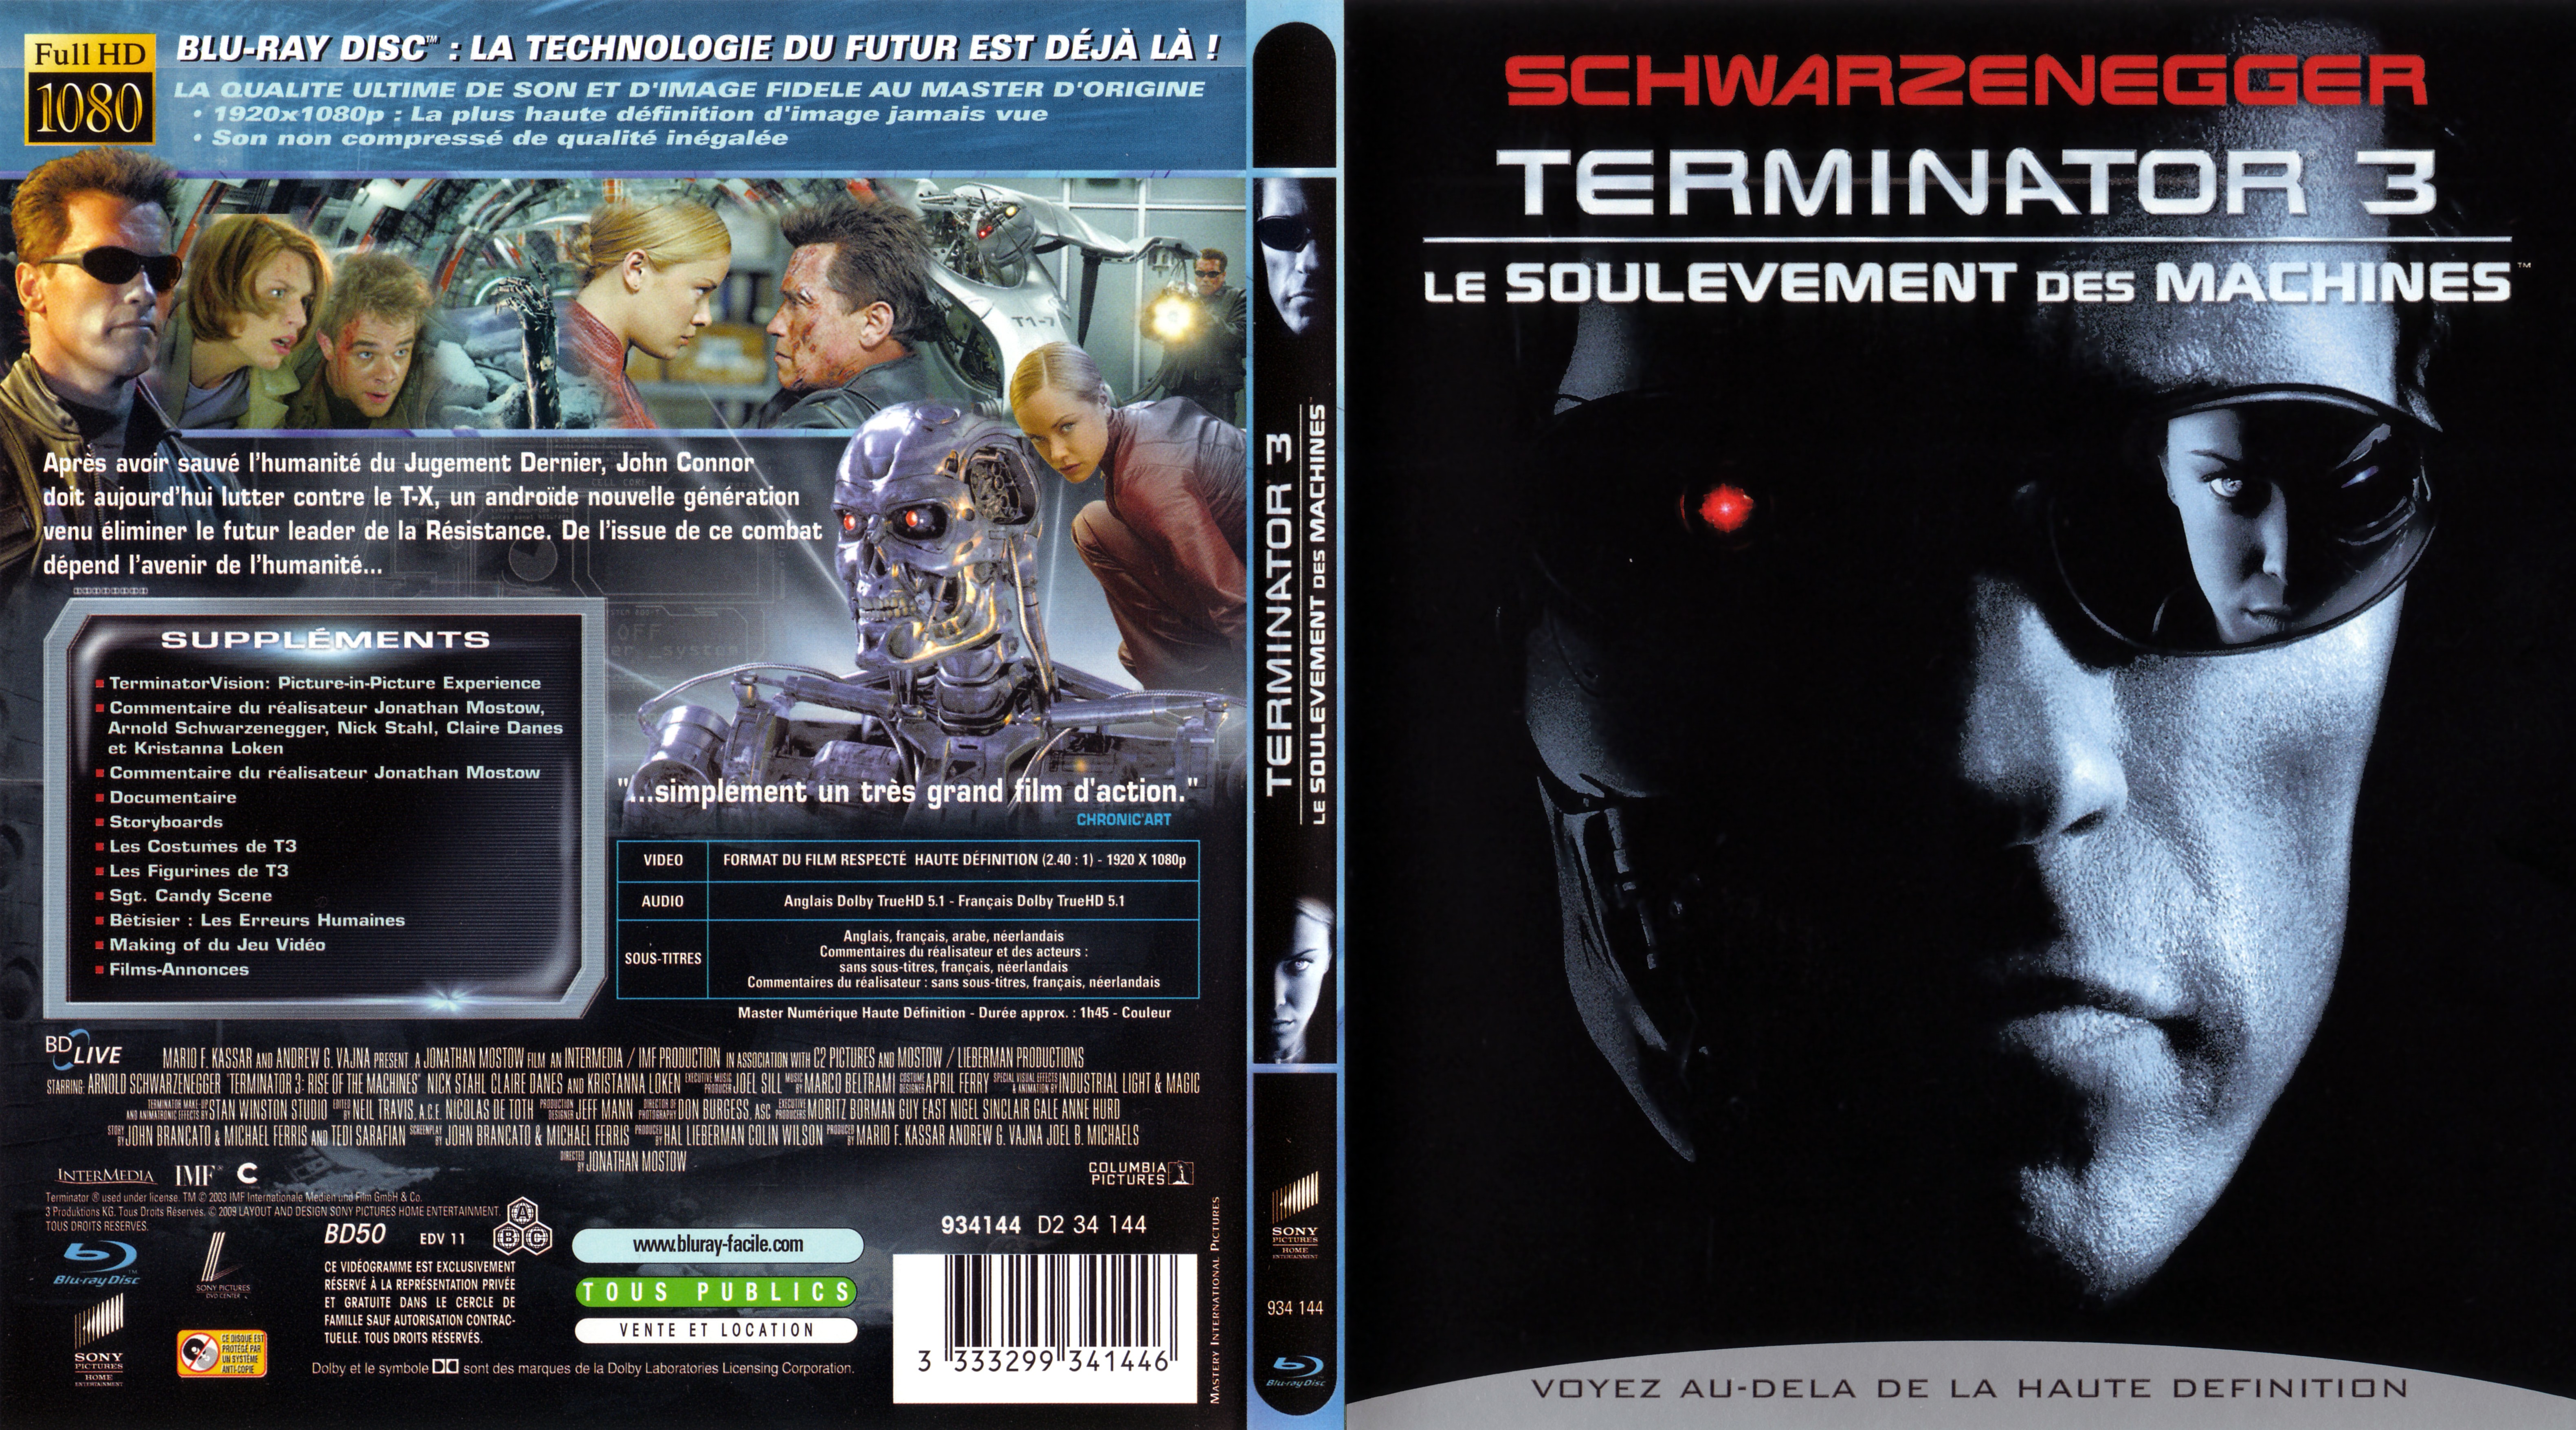 Jaquette DVD Terminator 3 (BLU-RAY)